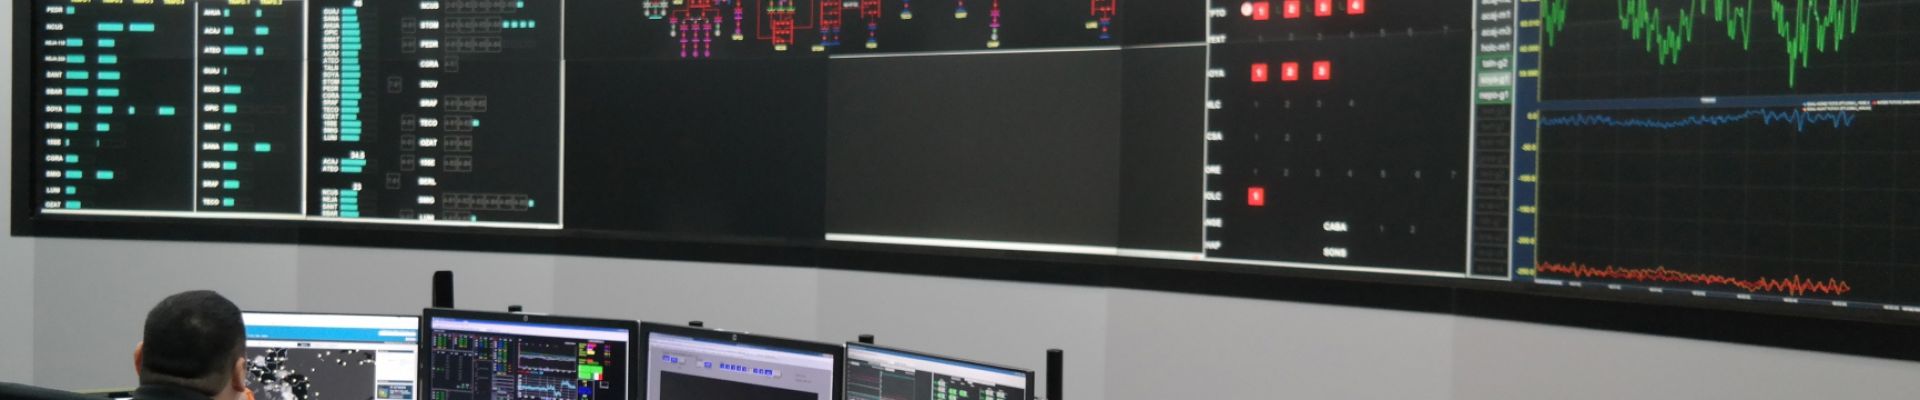 Virtual Power Plant for trading flexibility